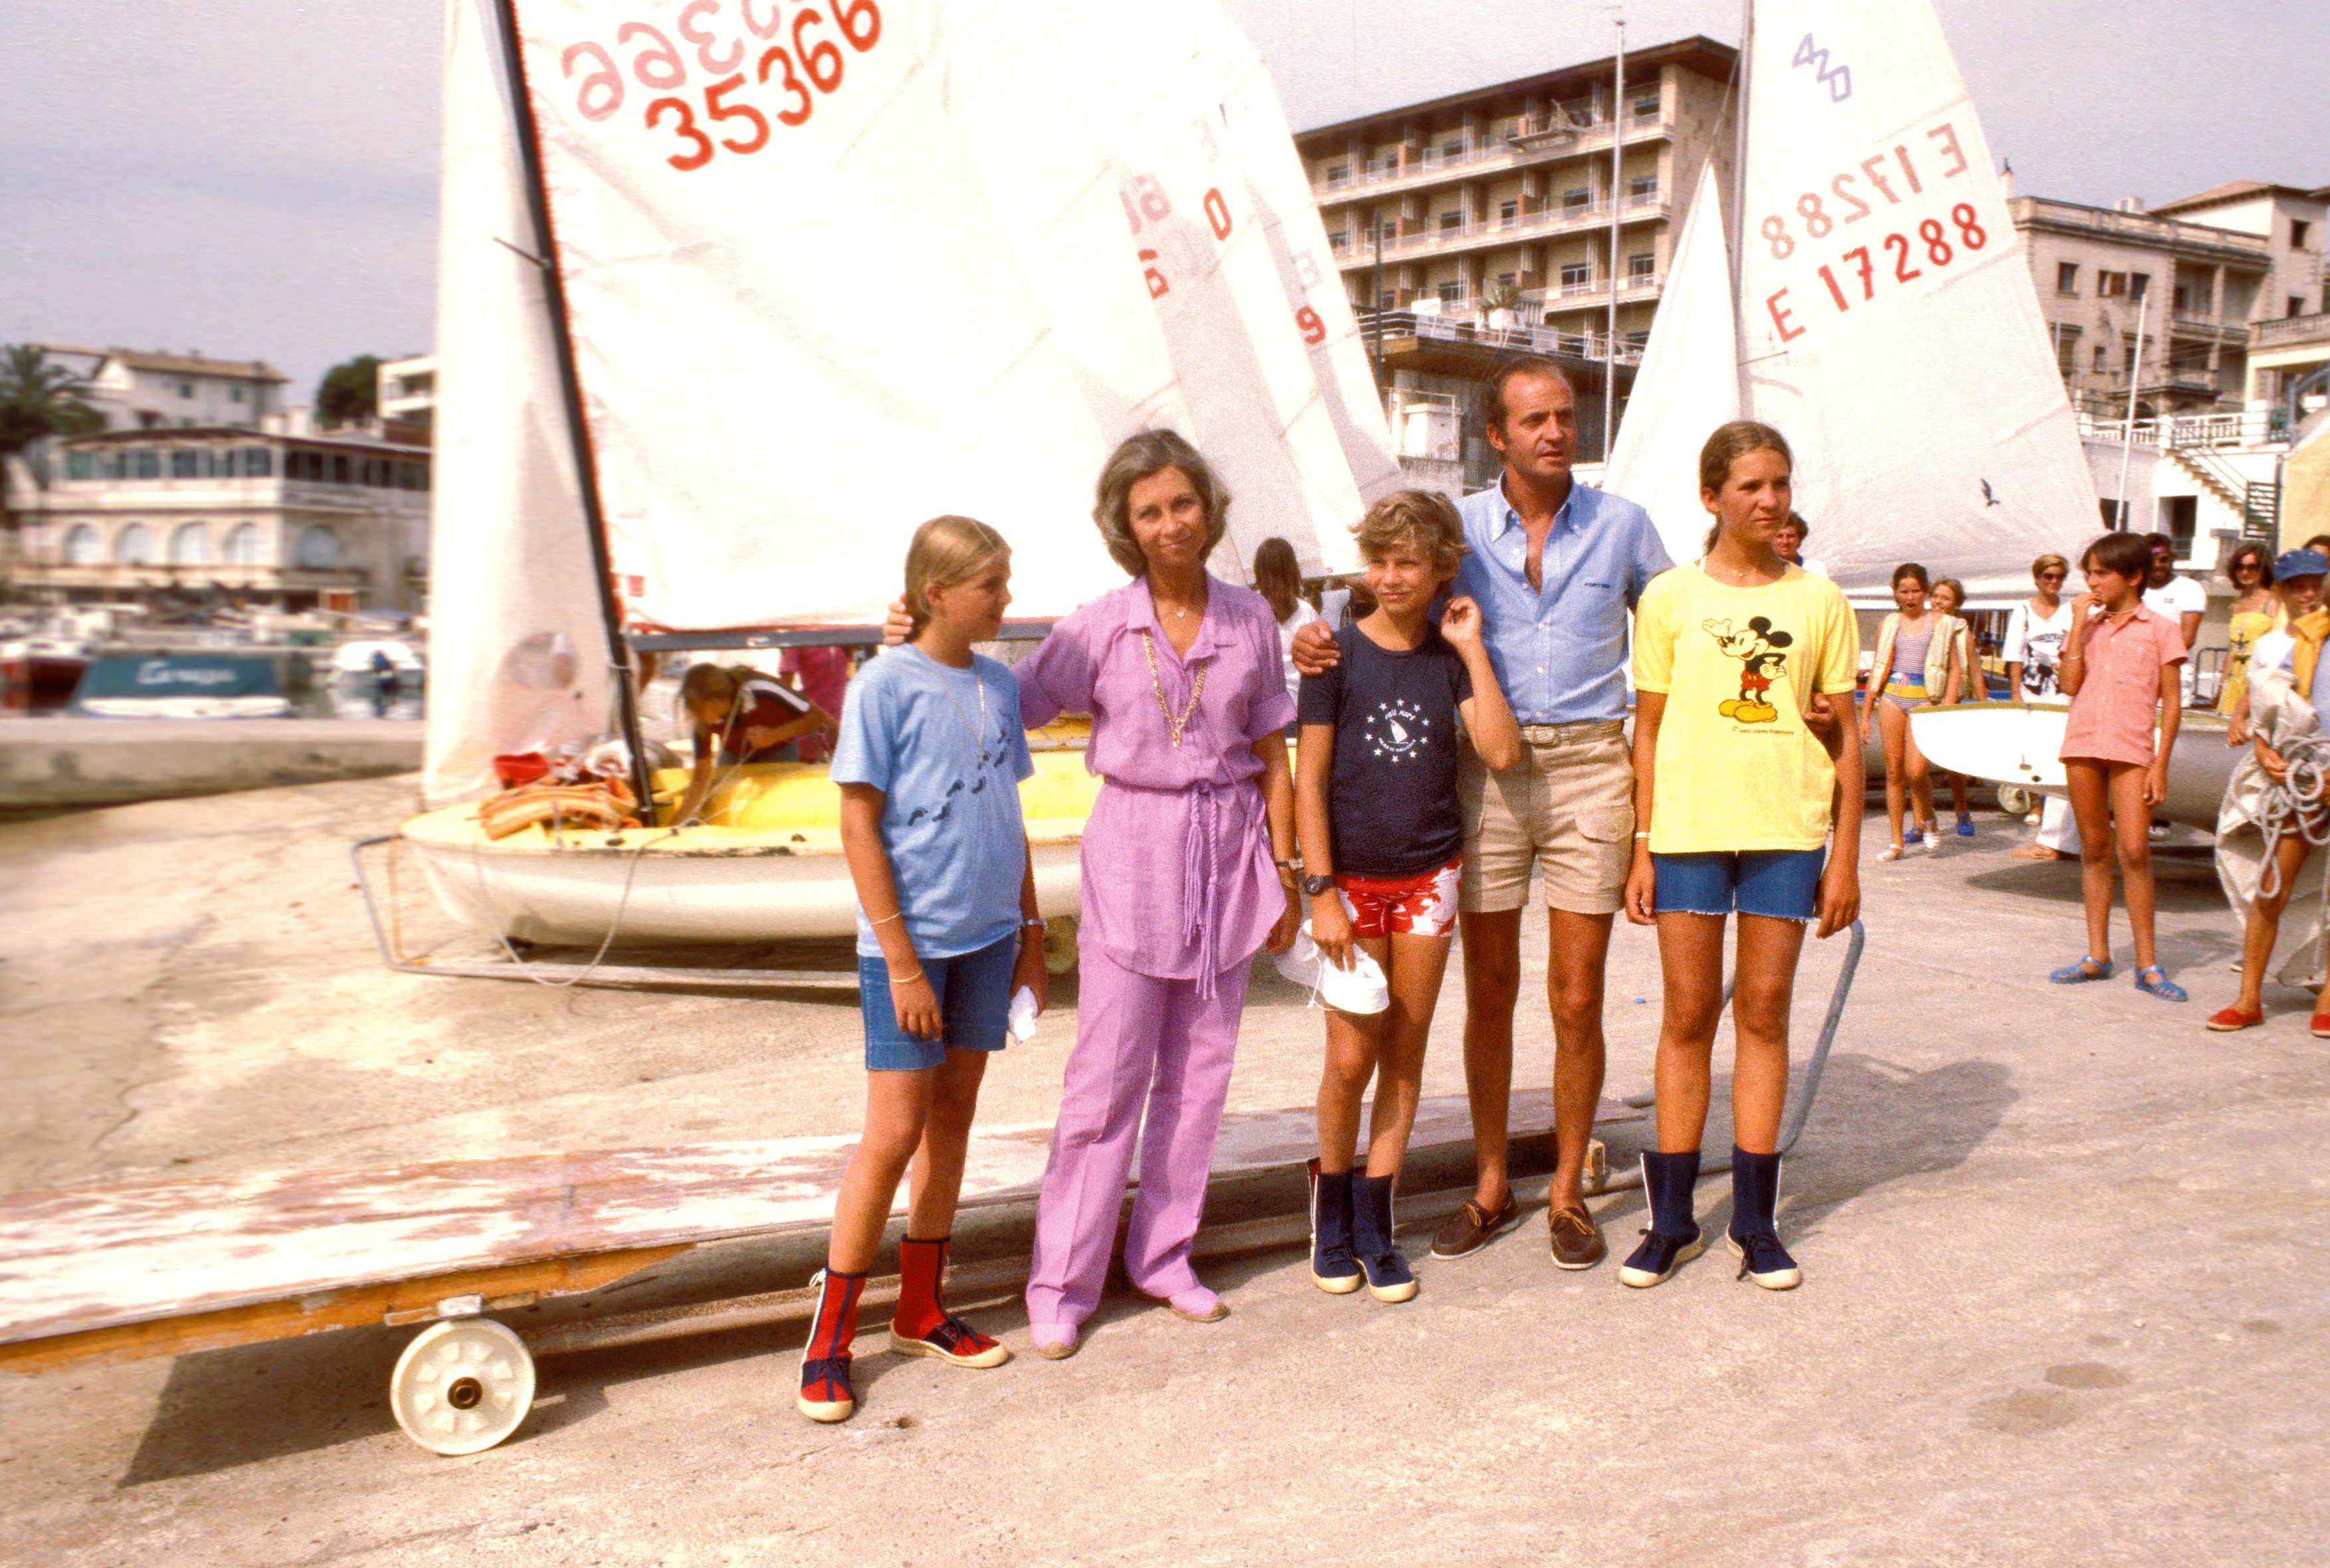 1988. Palma de Mallorca. Spain Kings and family on holidays.